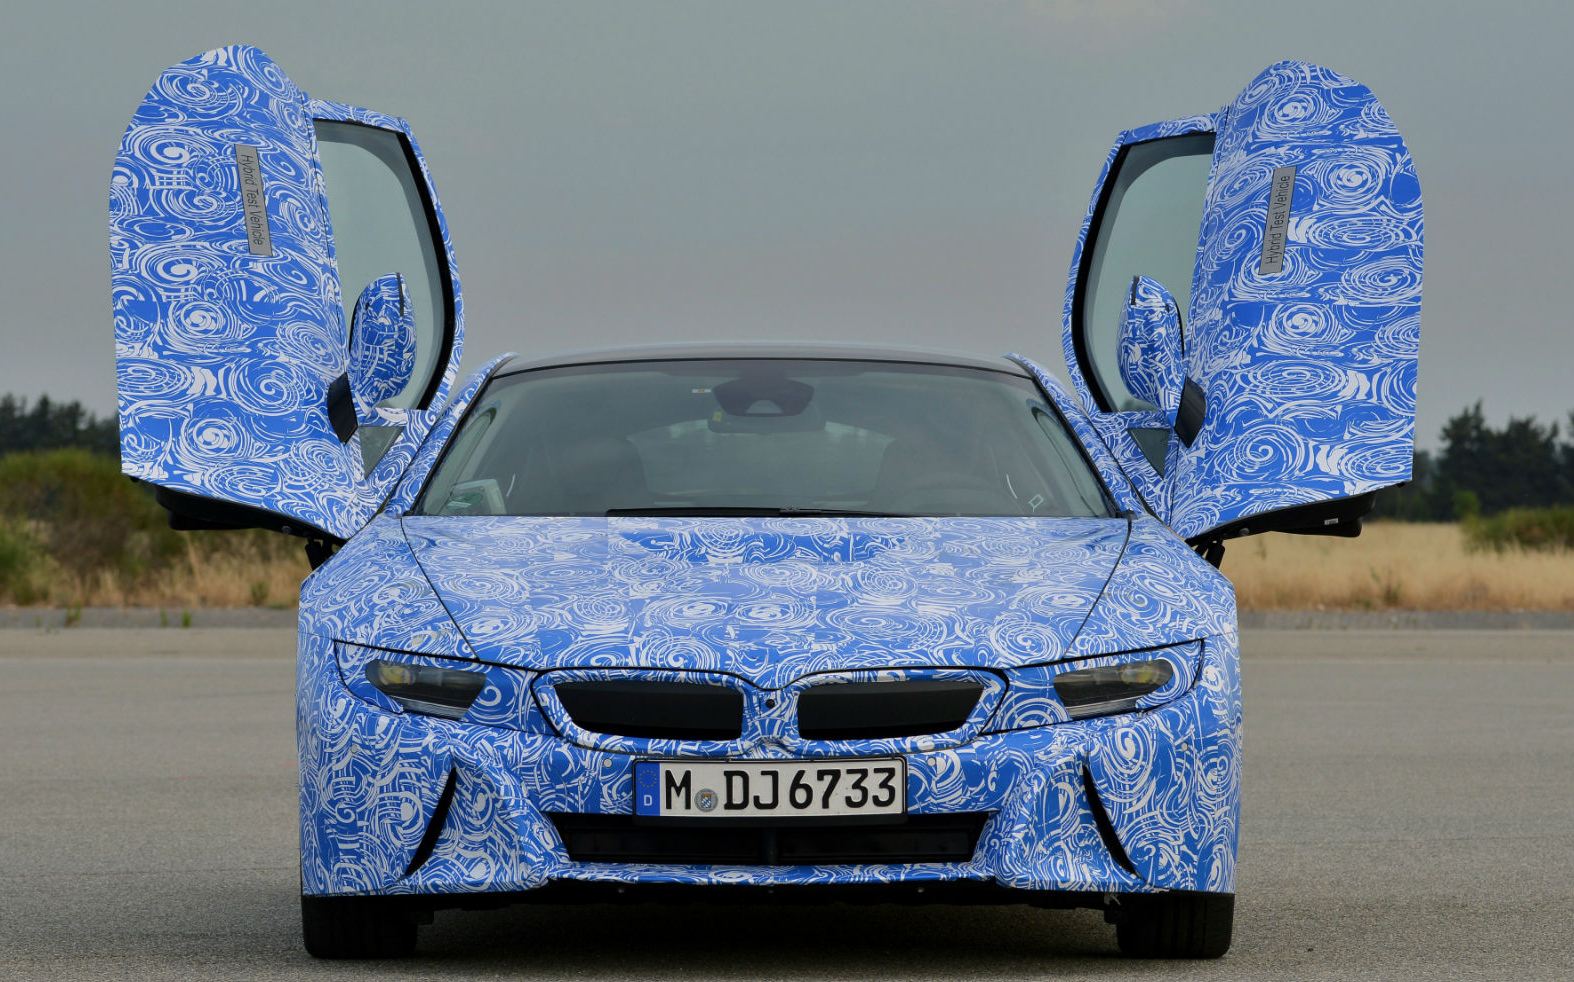 BMW i8 hybrid sport car to debut next month’s Frankfurt Motor Show